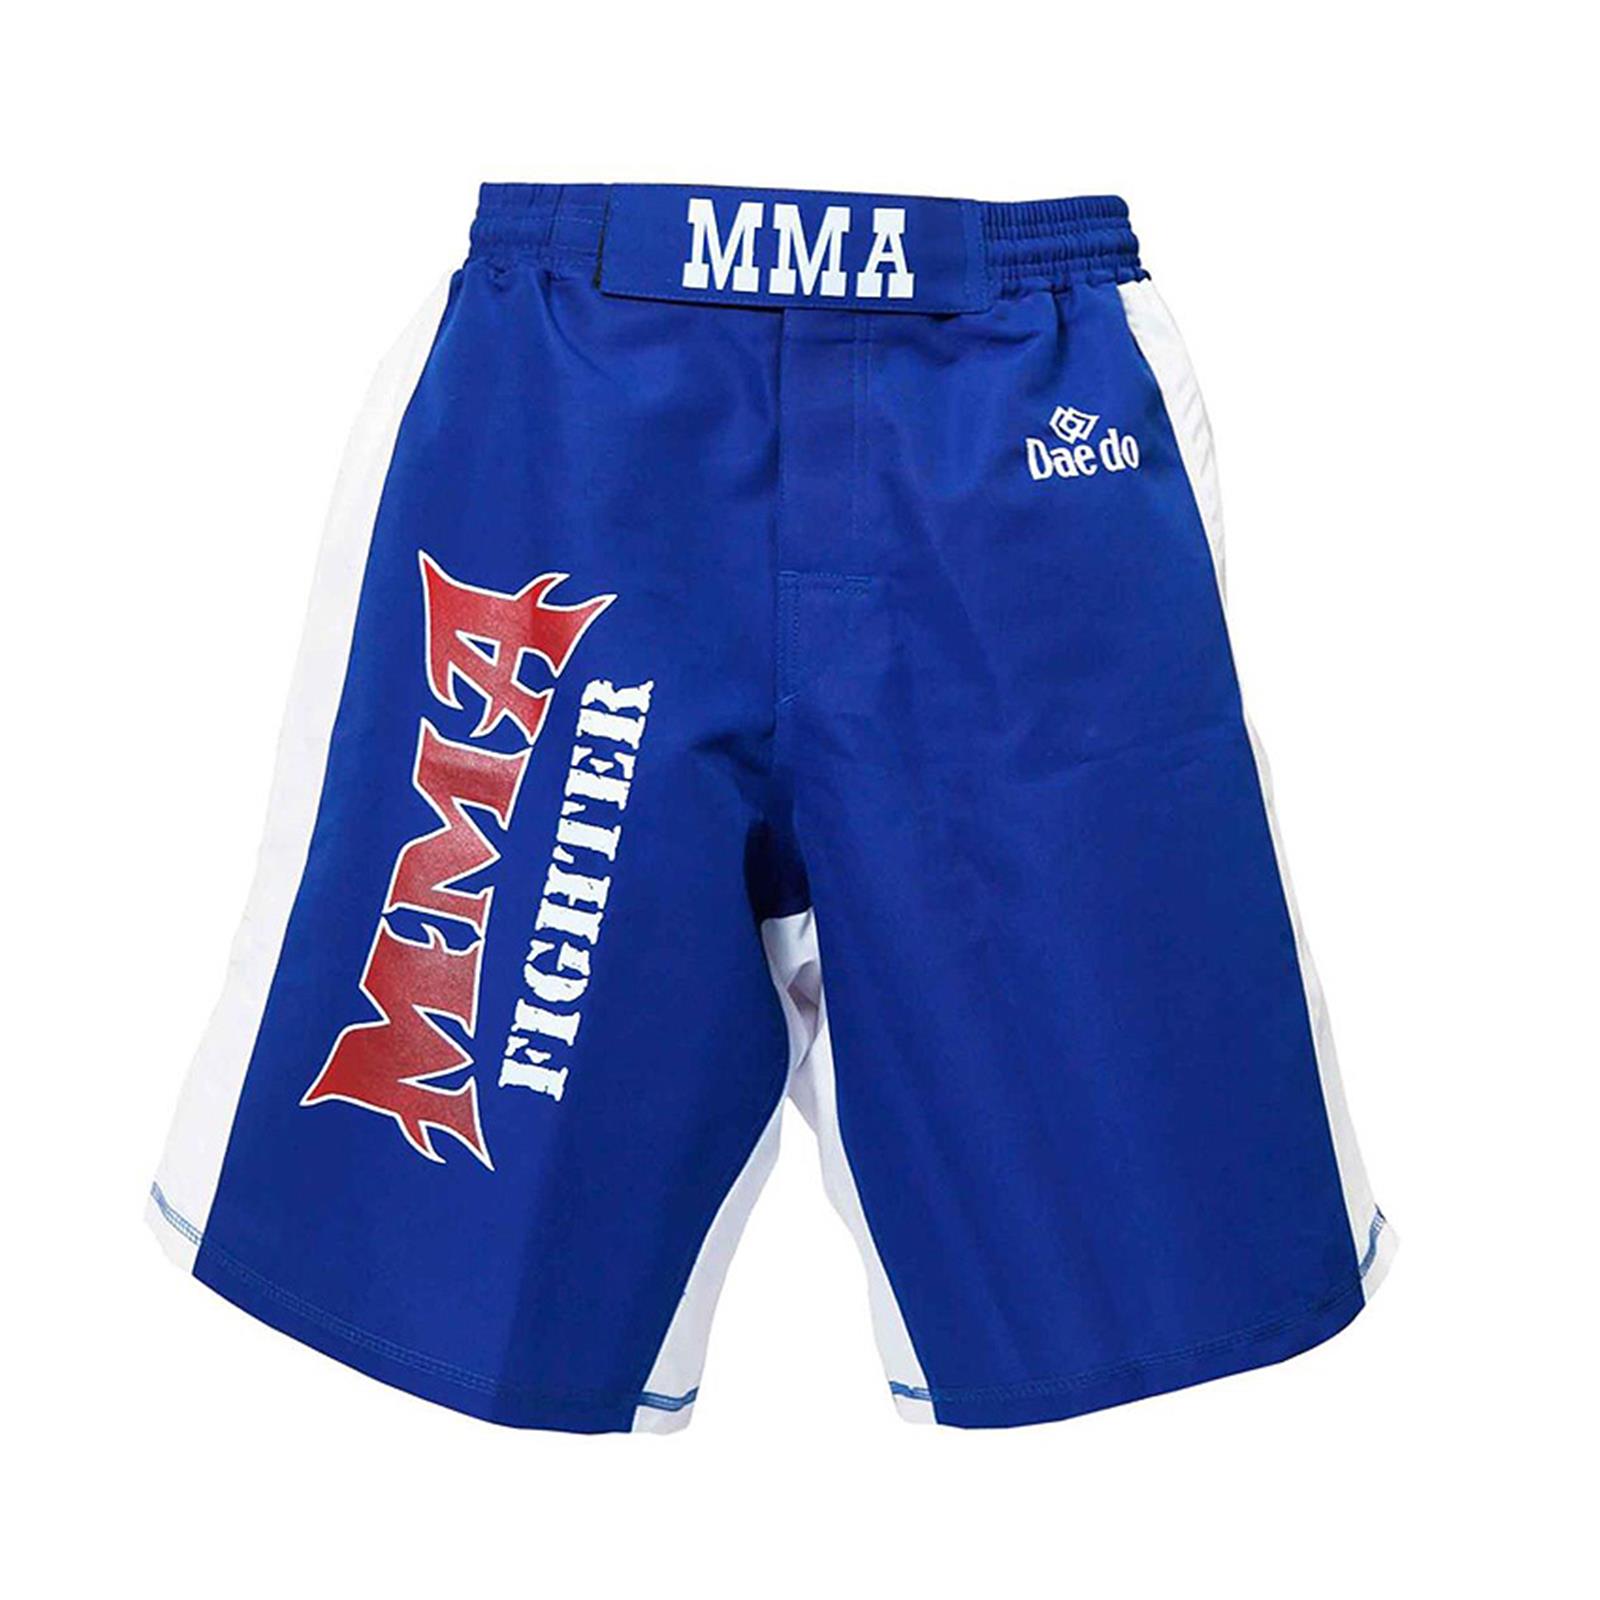 Dae Do Pantalone MMA Fighter (XL - ROYAL)